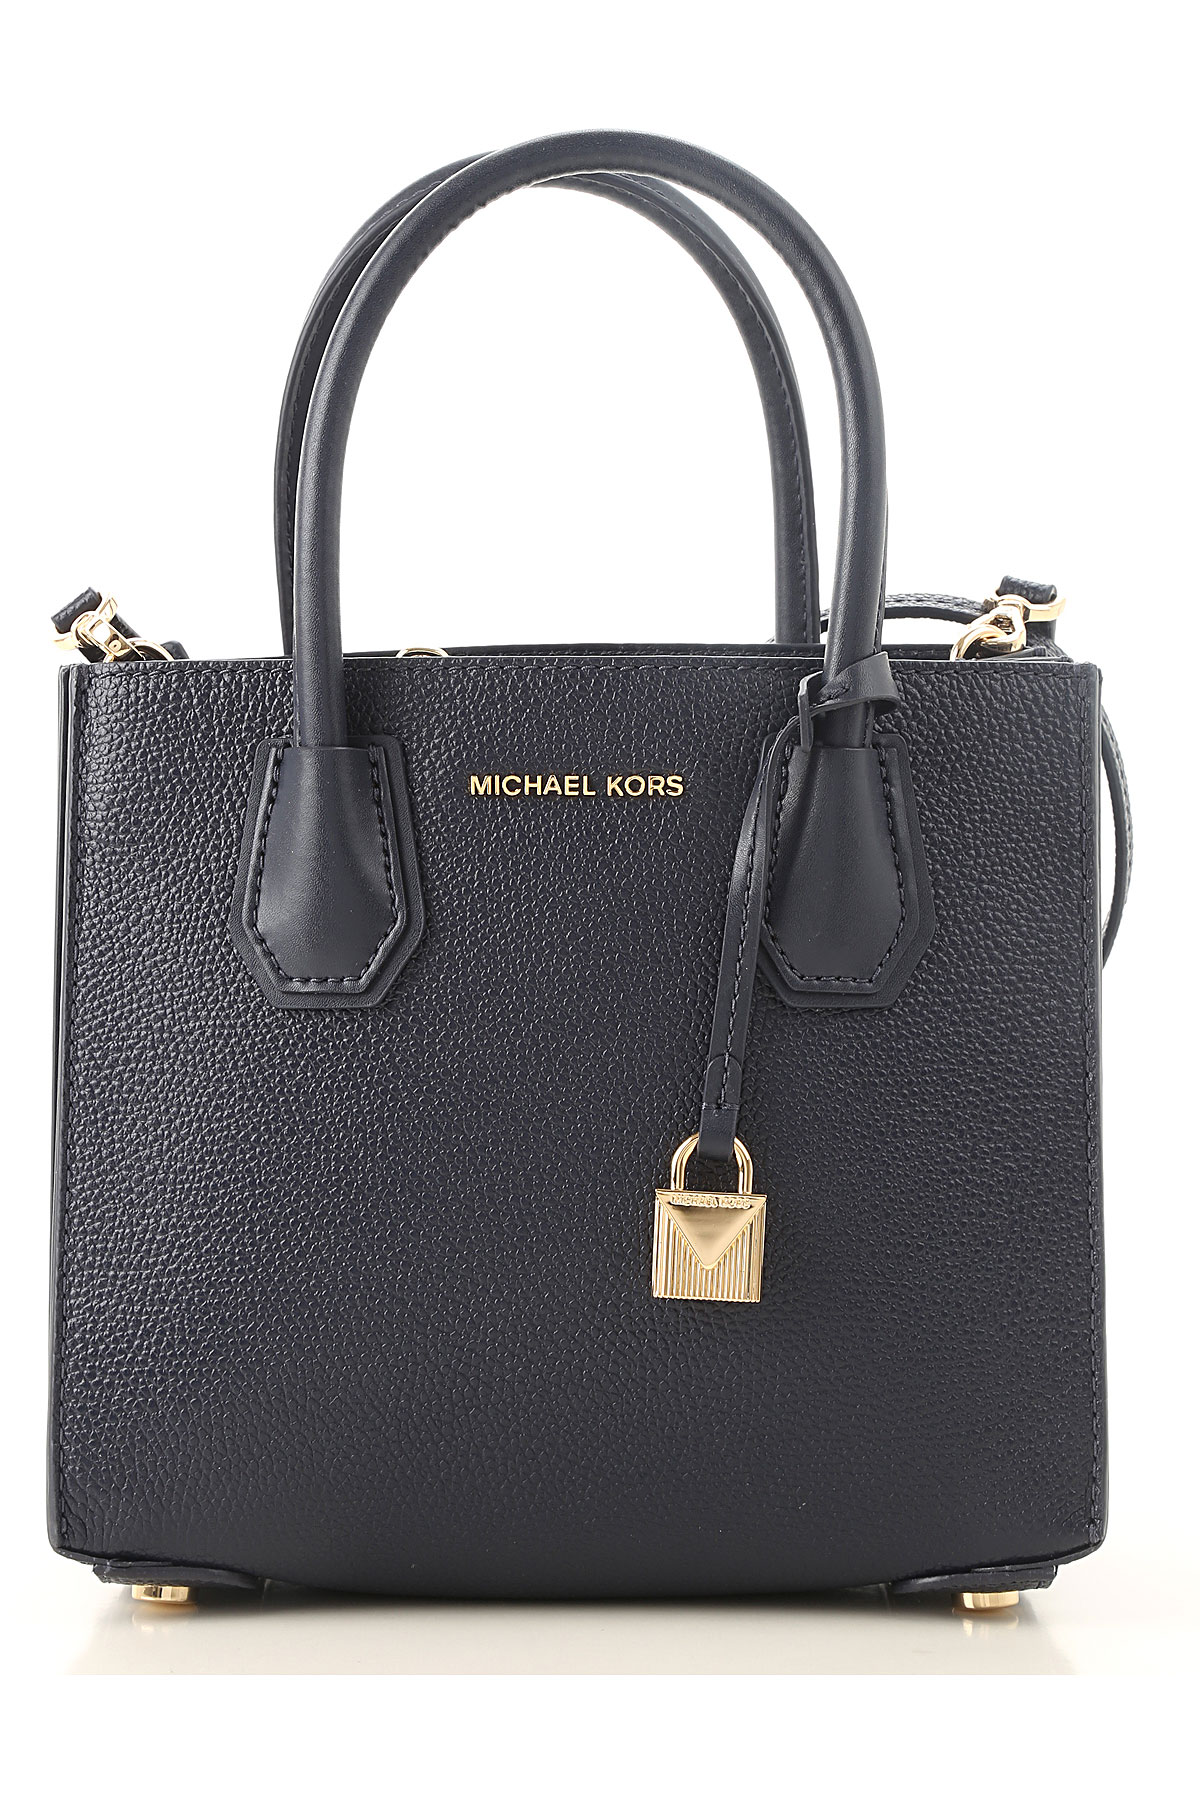 Handbags Michael Kors, Style code: 30f8gm9m2t-414-admiral